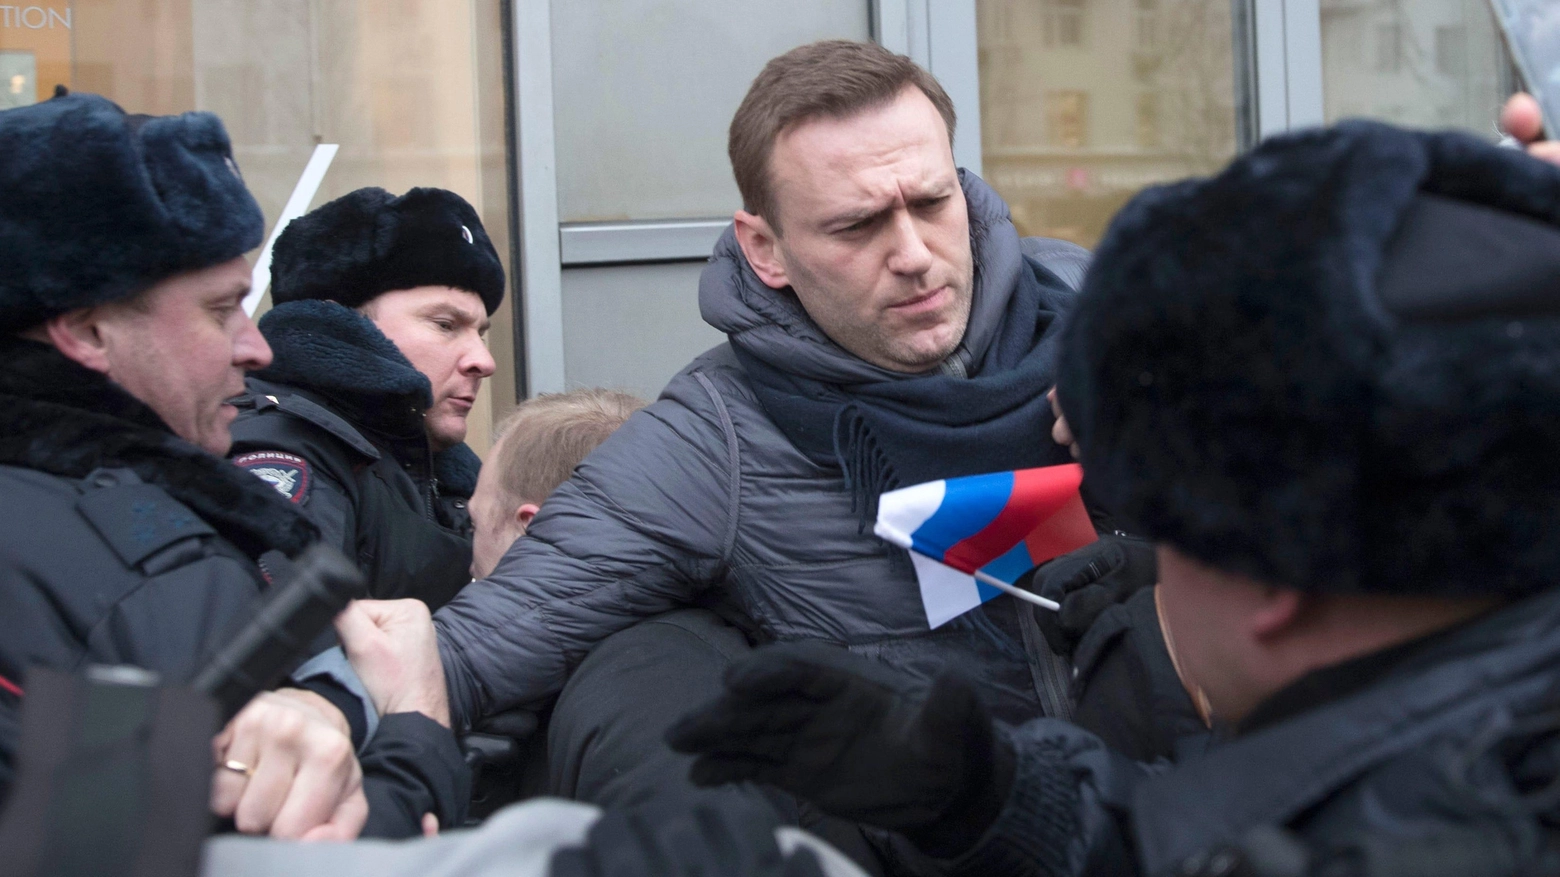 L’arresto di Aleksej Navalny, 44 anni, tra i principali oppositori di Putin